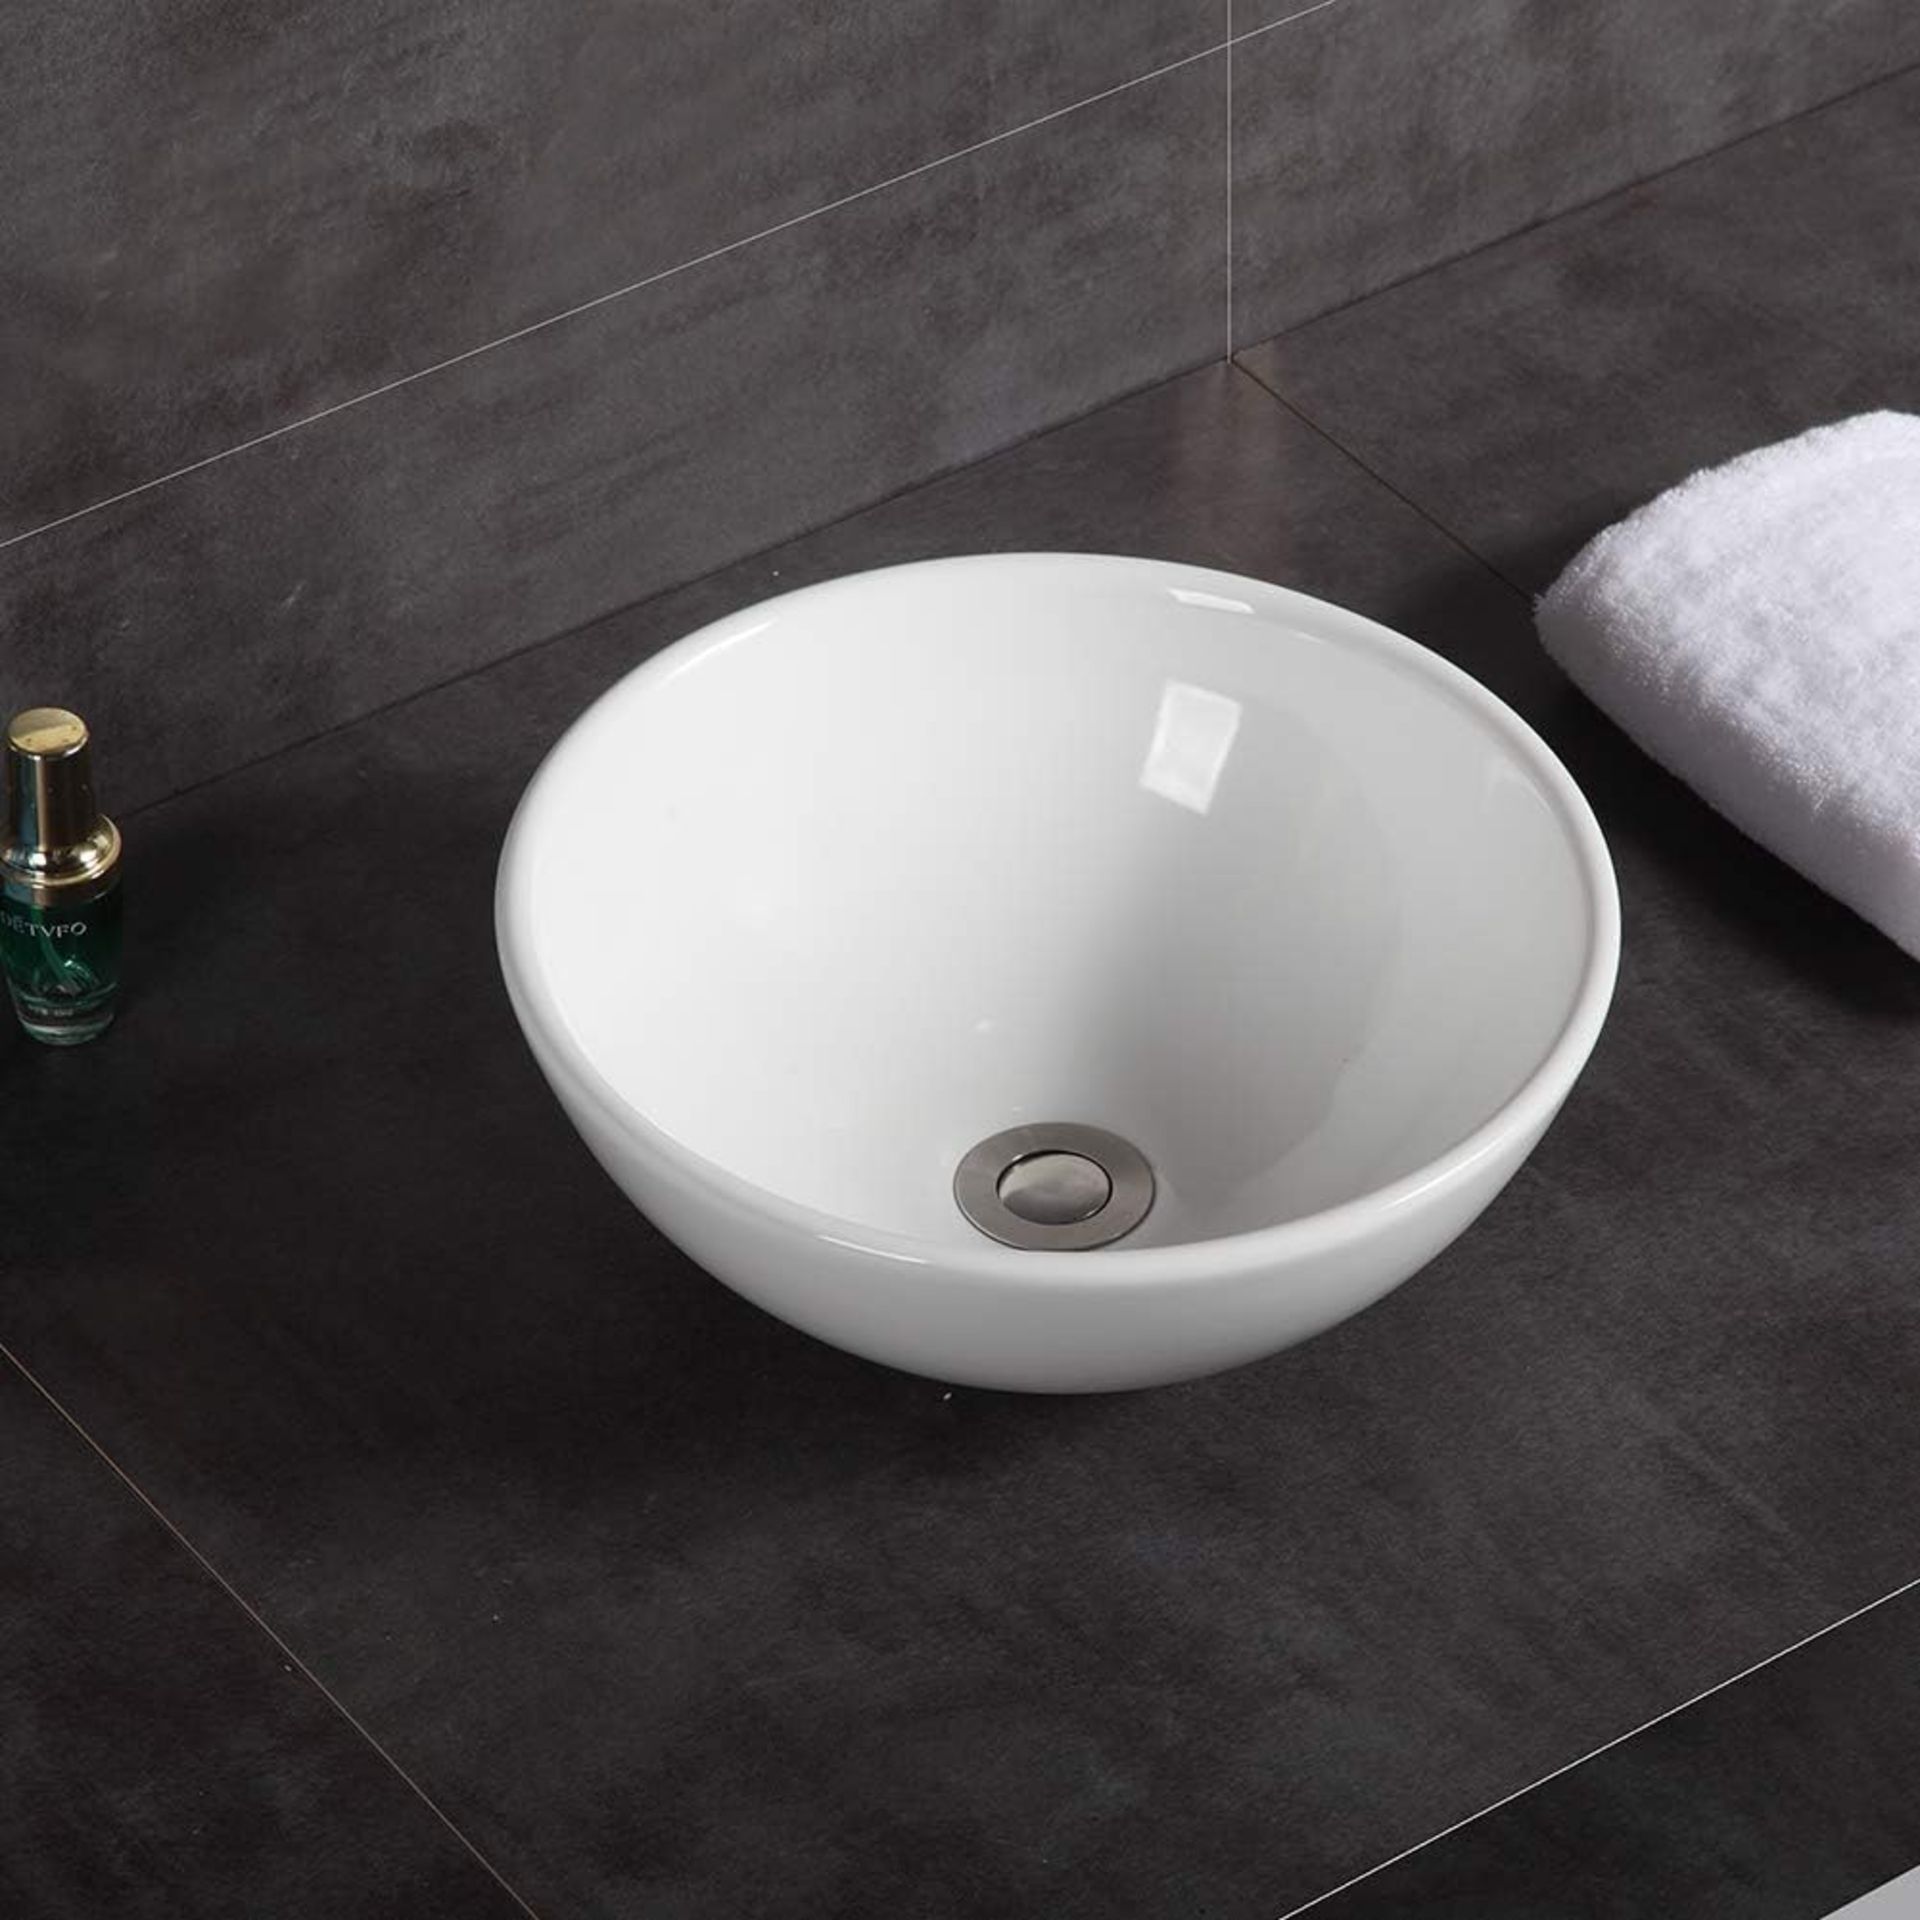 RRP £50.99 Modern Round Countertop Basin Sink Ceramic Vessel Bowl Washbasin for Lavatory Bathroom - Image 2 of 4